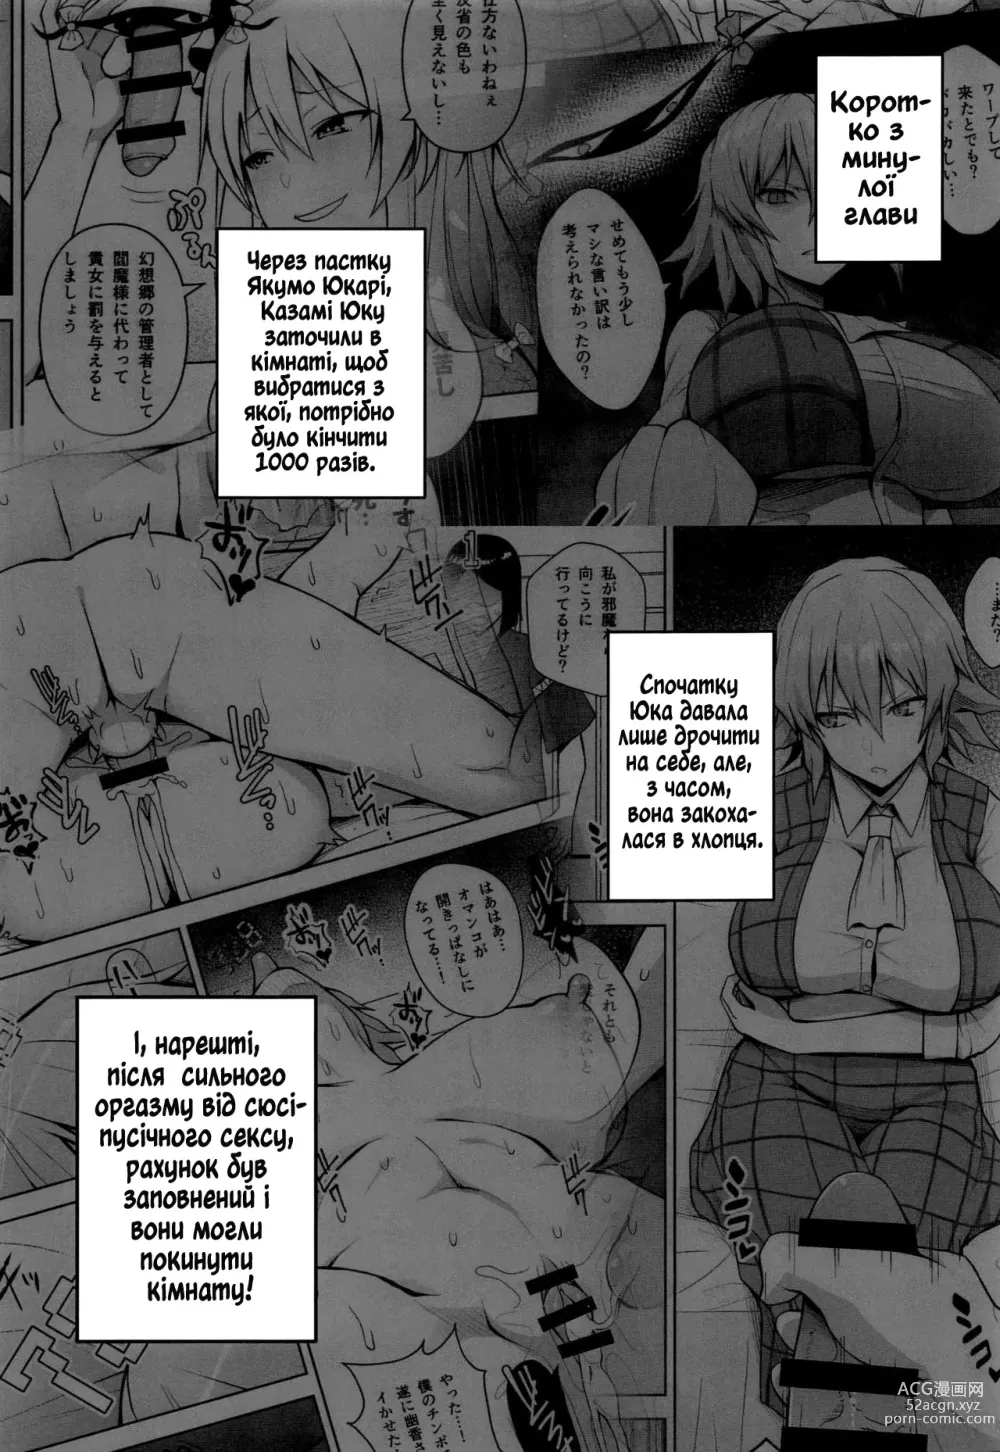 Page 3 of doujinshi Все, що ти... зможеш заповнити - твоє!